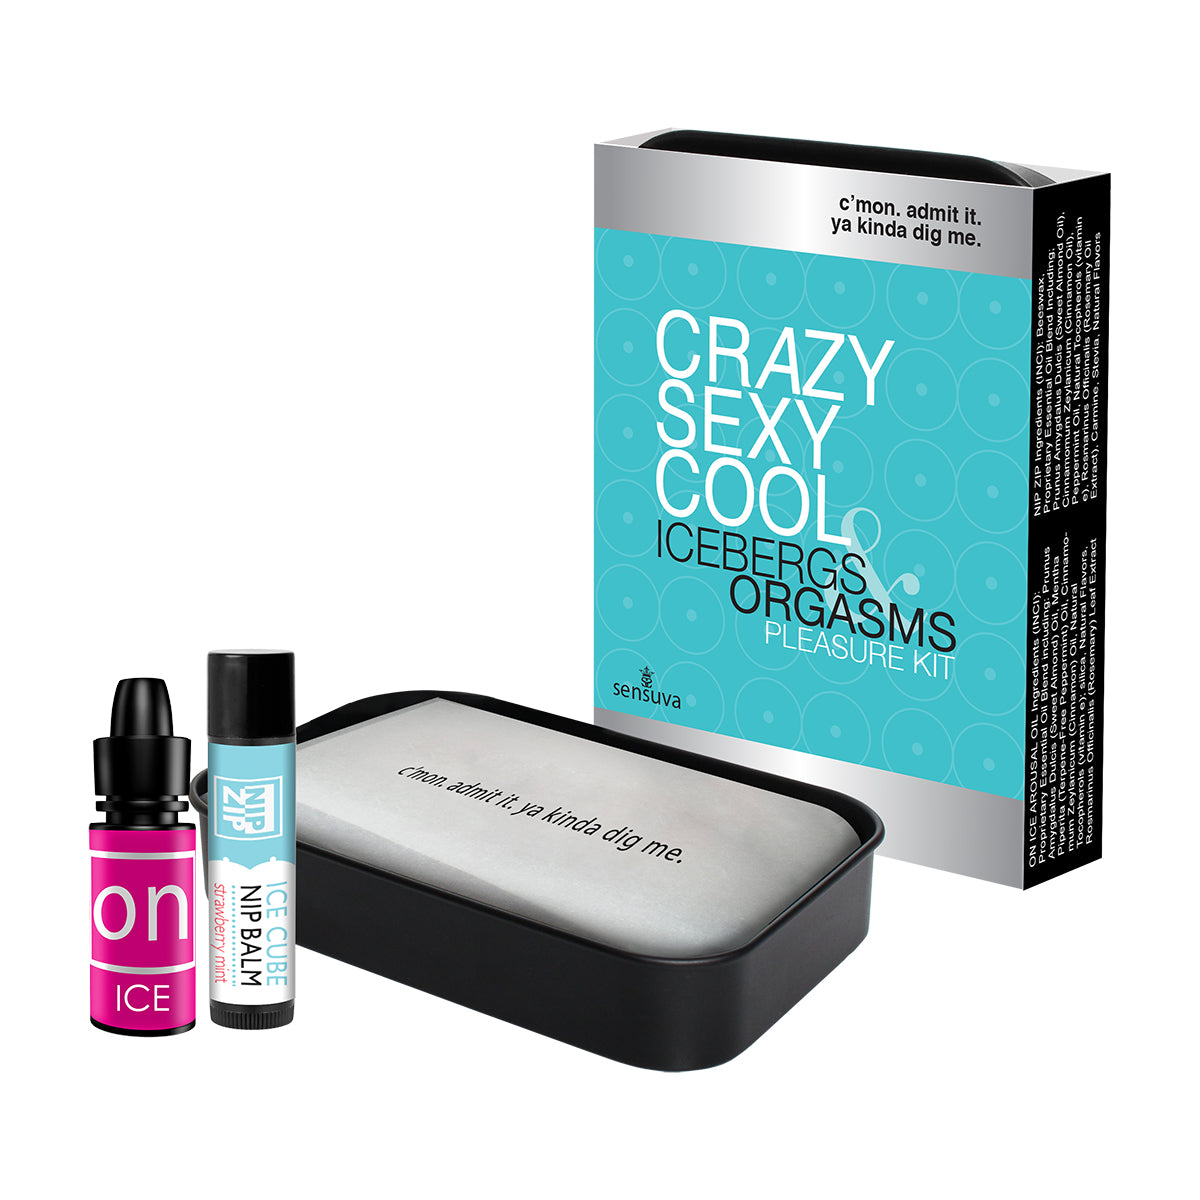 Crazy Sexy Cool Icebergs Orgasms Pleasure Kit SEN-VL890-OPK